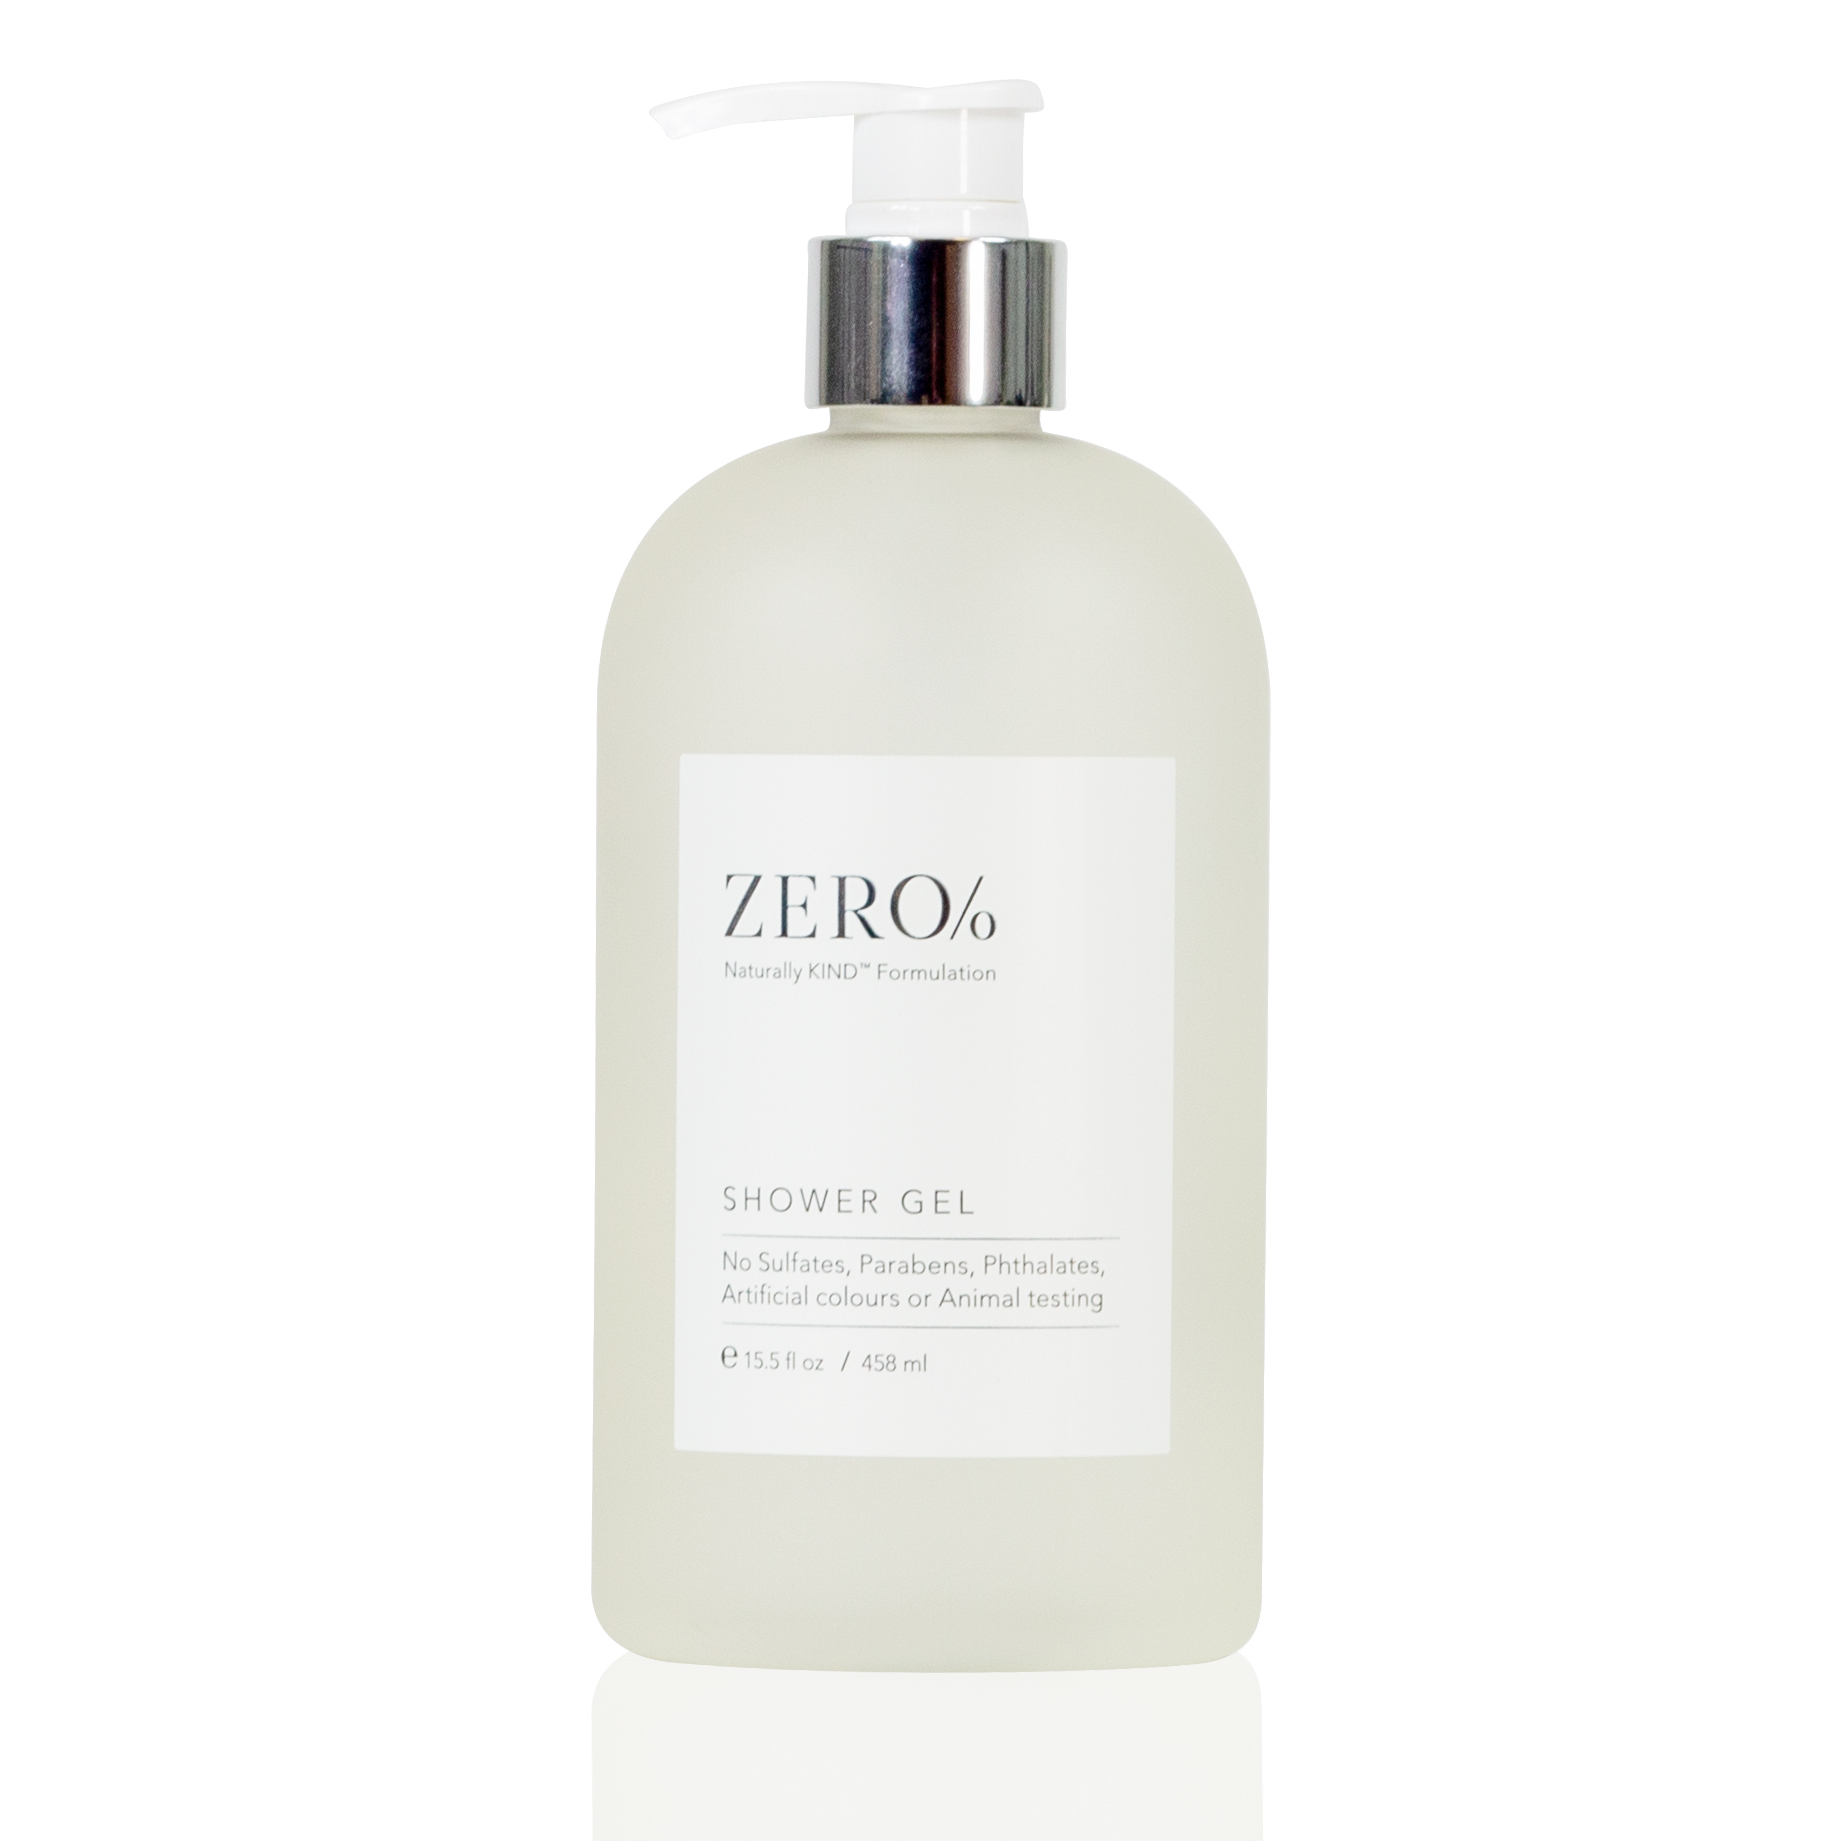 Zero Percent Shower Gel 15.5oz Retail size